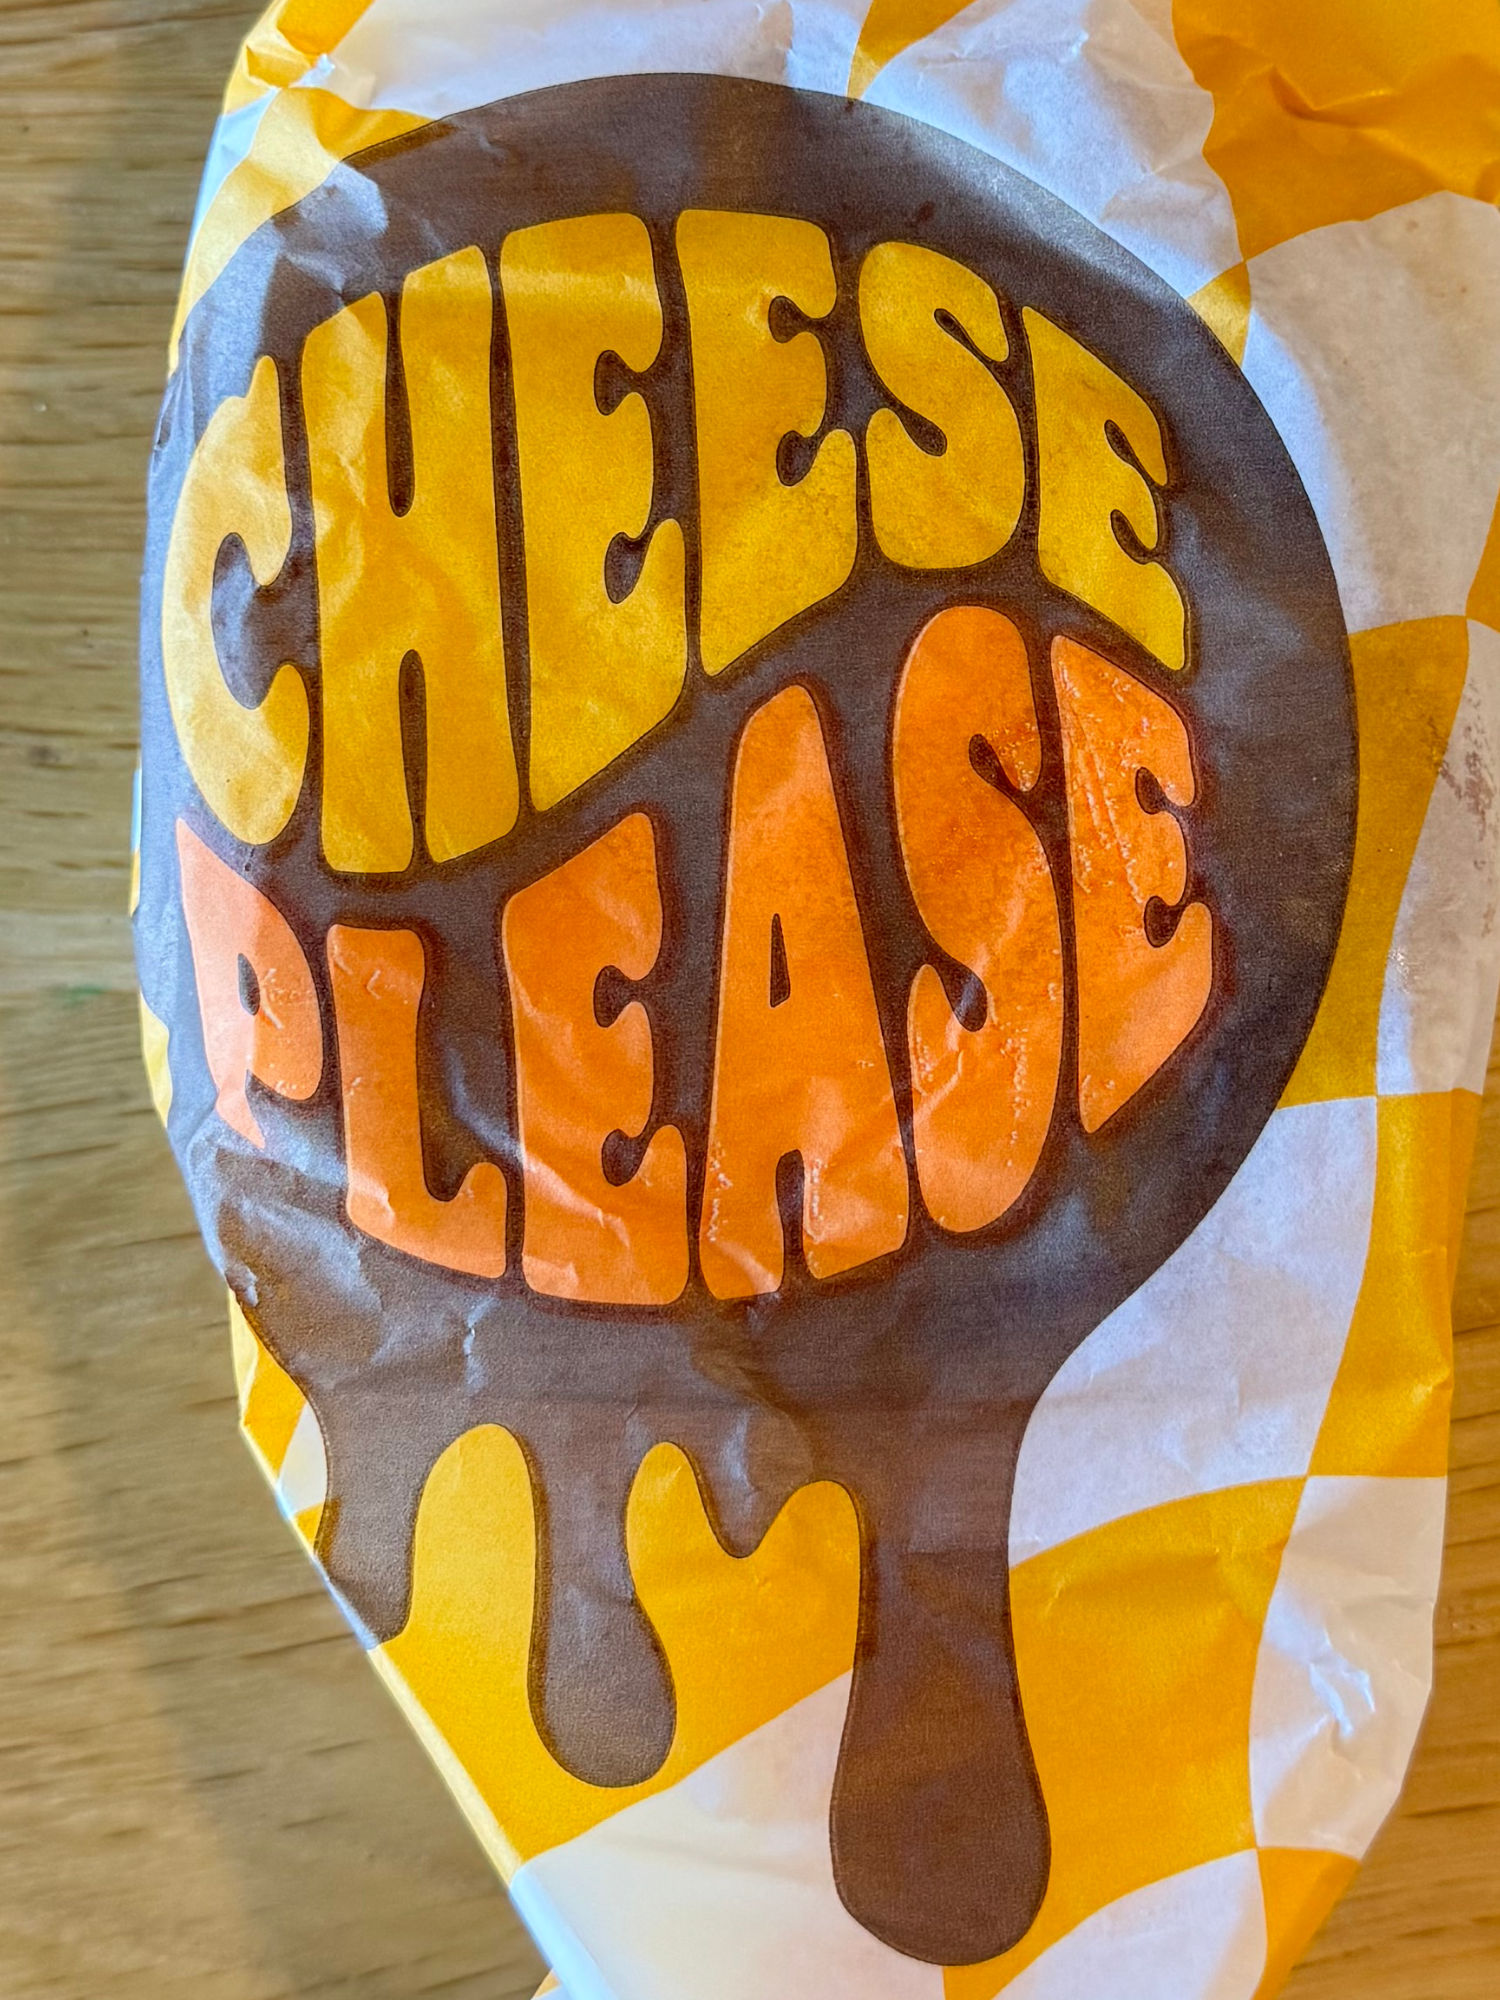 Burger King Cheese Please